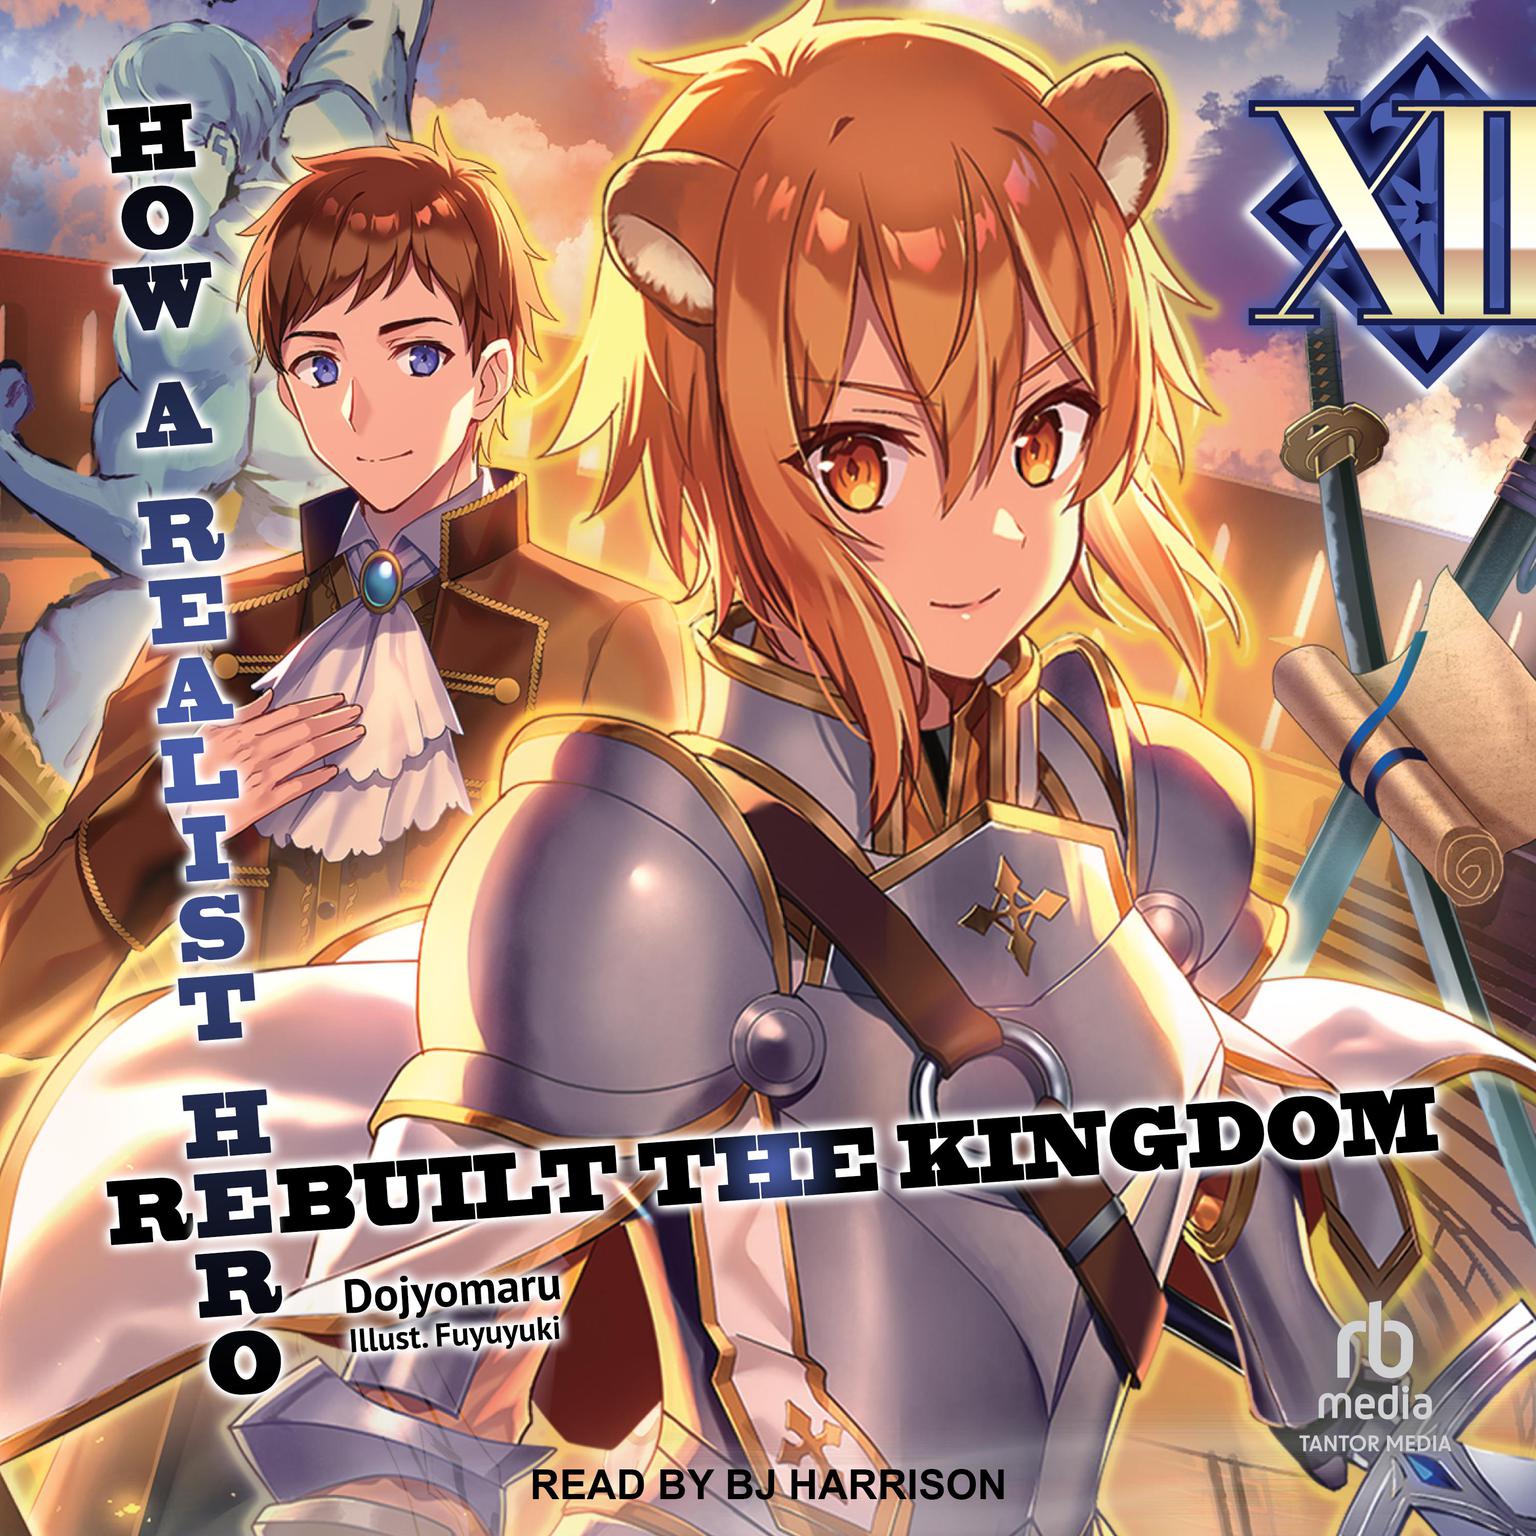 How a Realist Hero Rebuilt the Kingdom: Volume 12 Audiobook, by Dojyomaru 